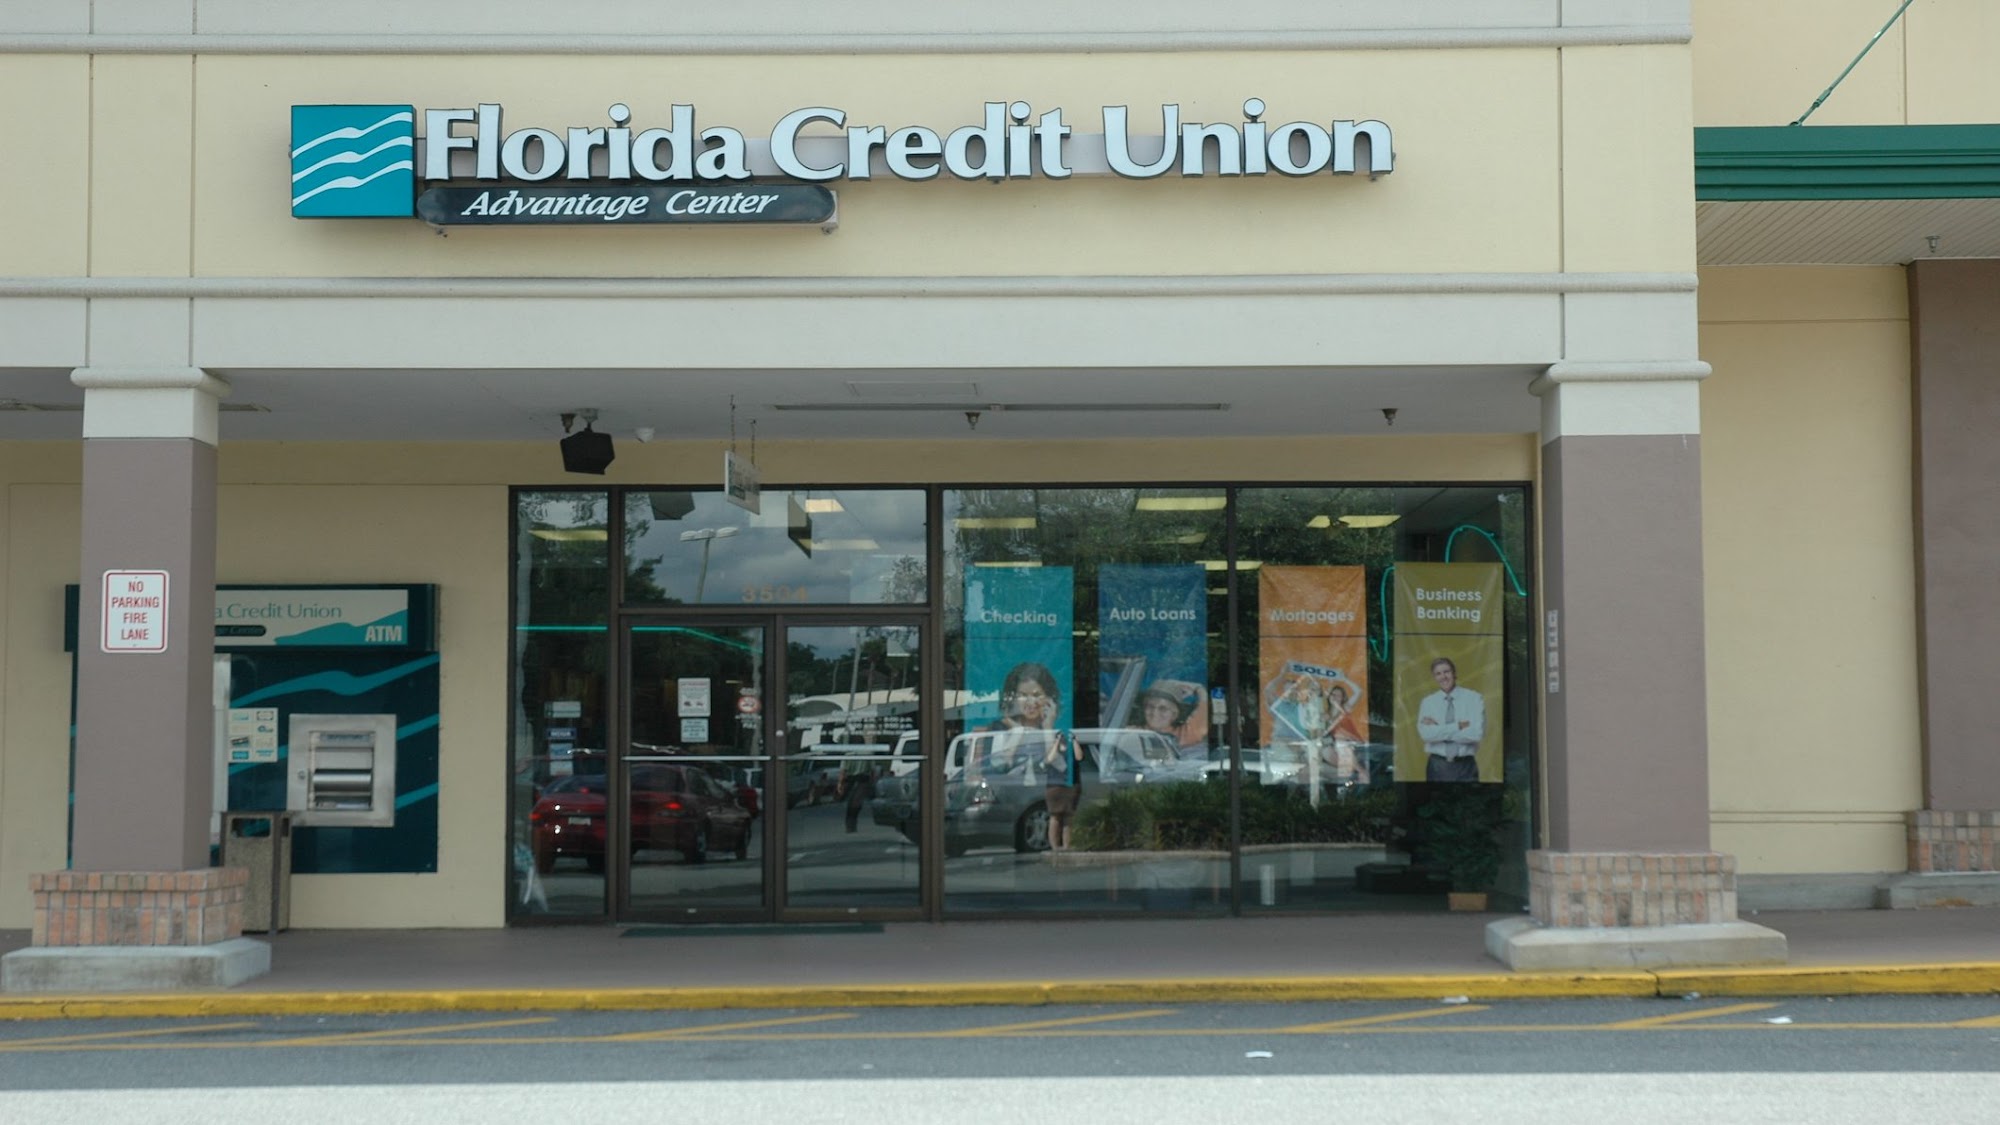 Florida Credit Union